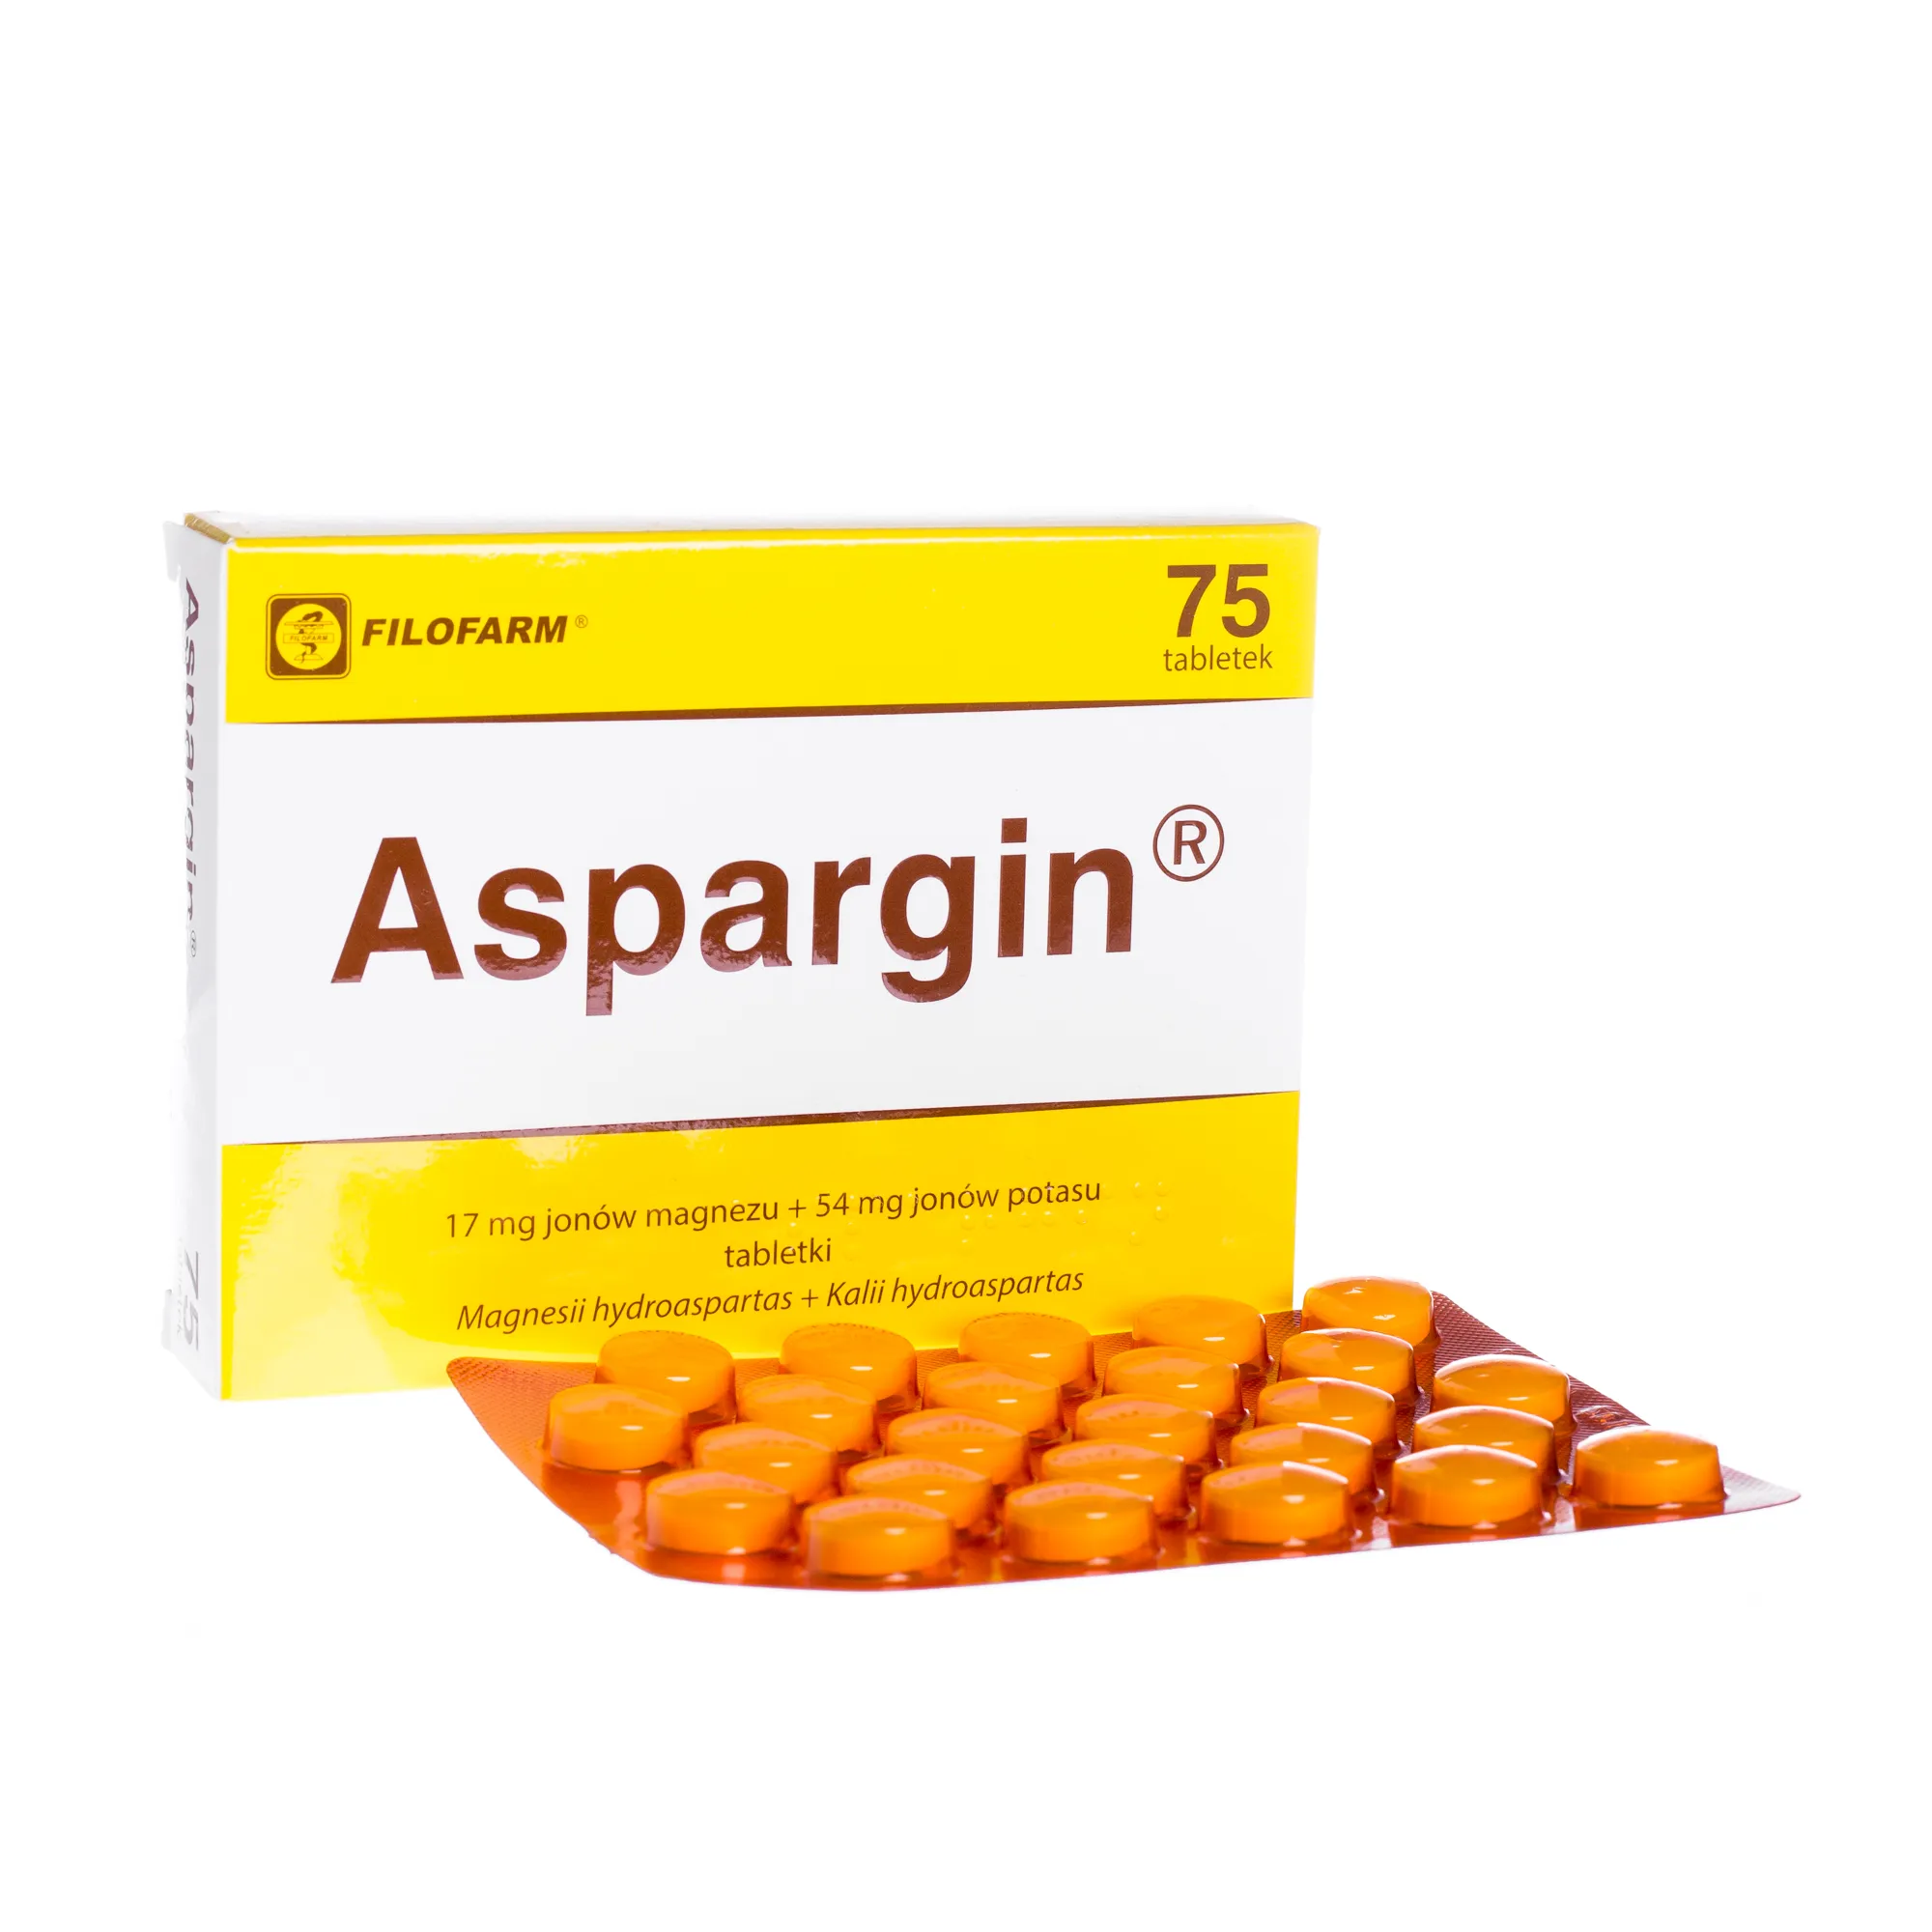 Aspargin, Magnesii hydroaspartas + Kalii hydroaspartas, 75 tabletek